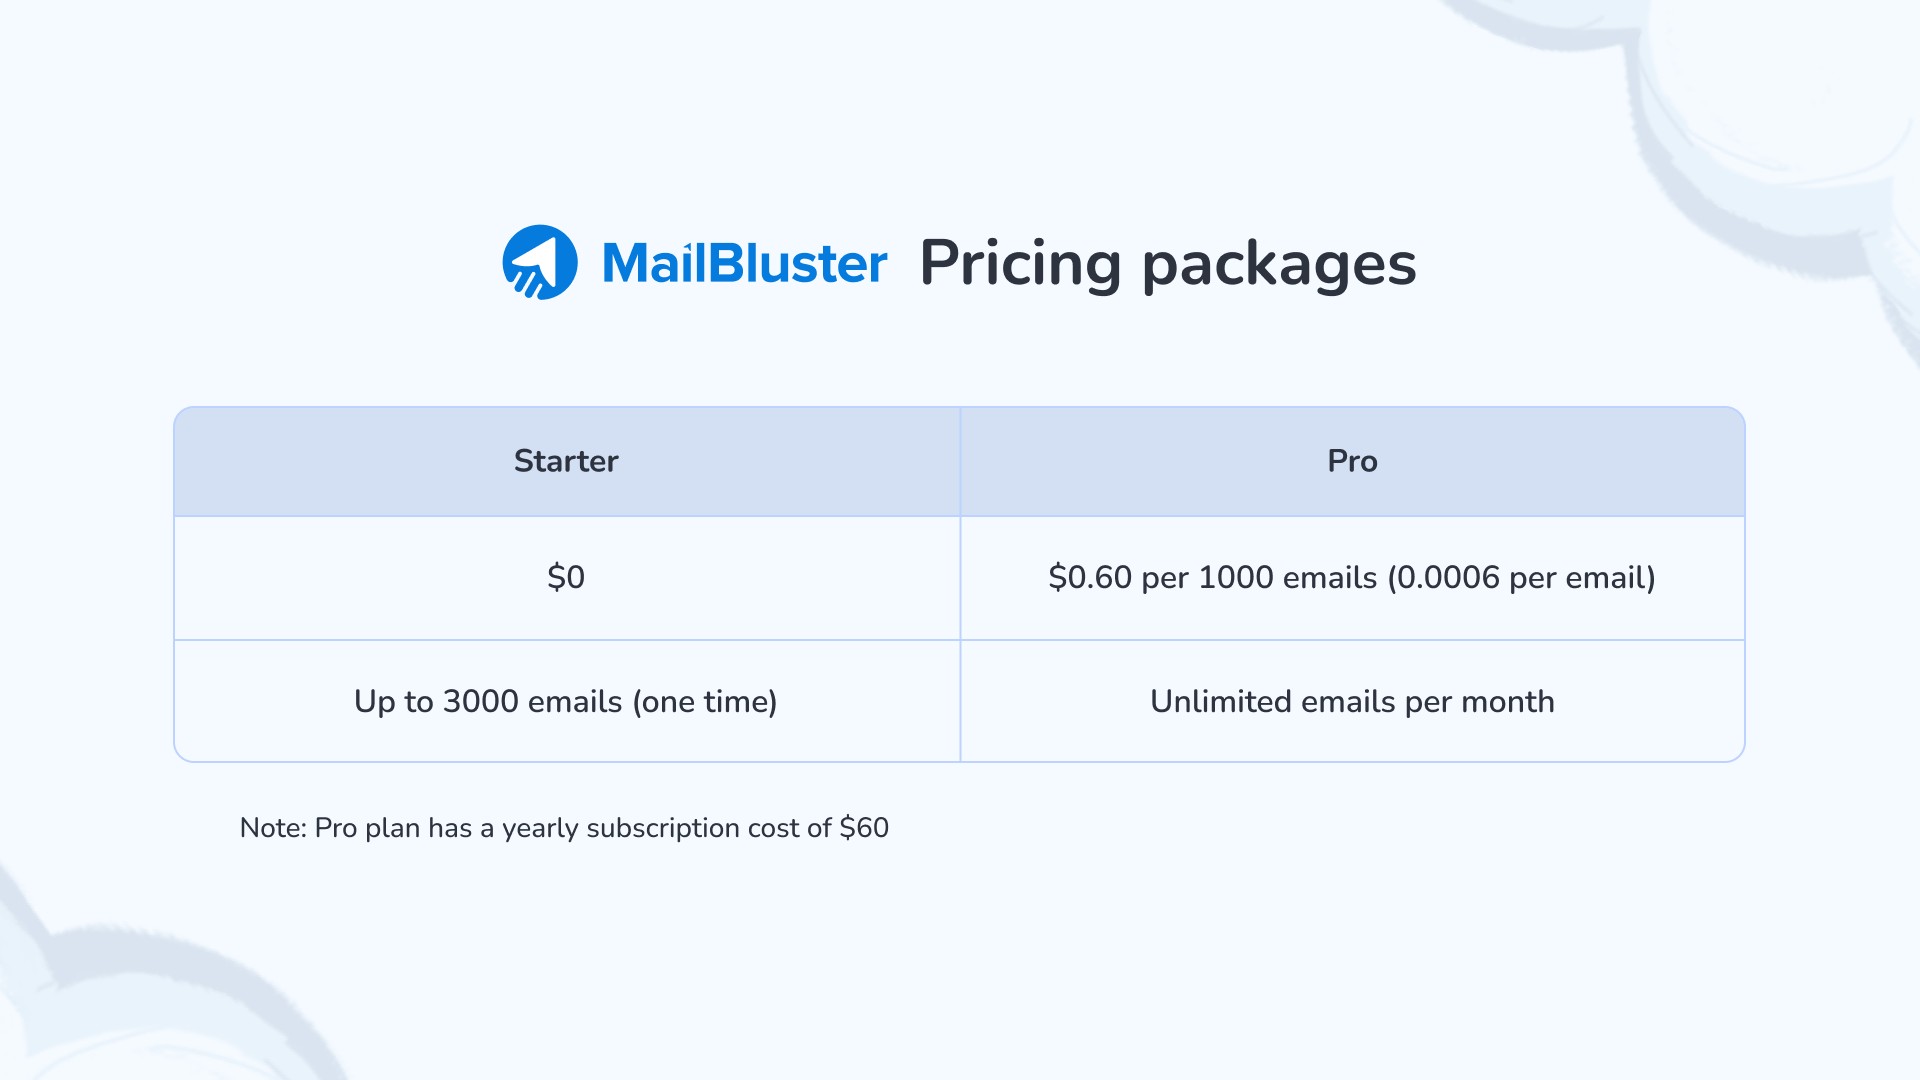 MailBluster pricing details.